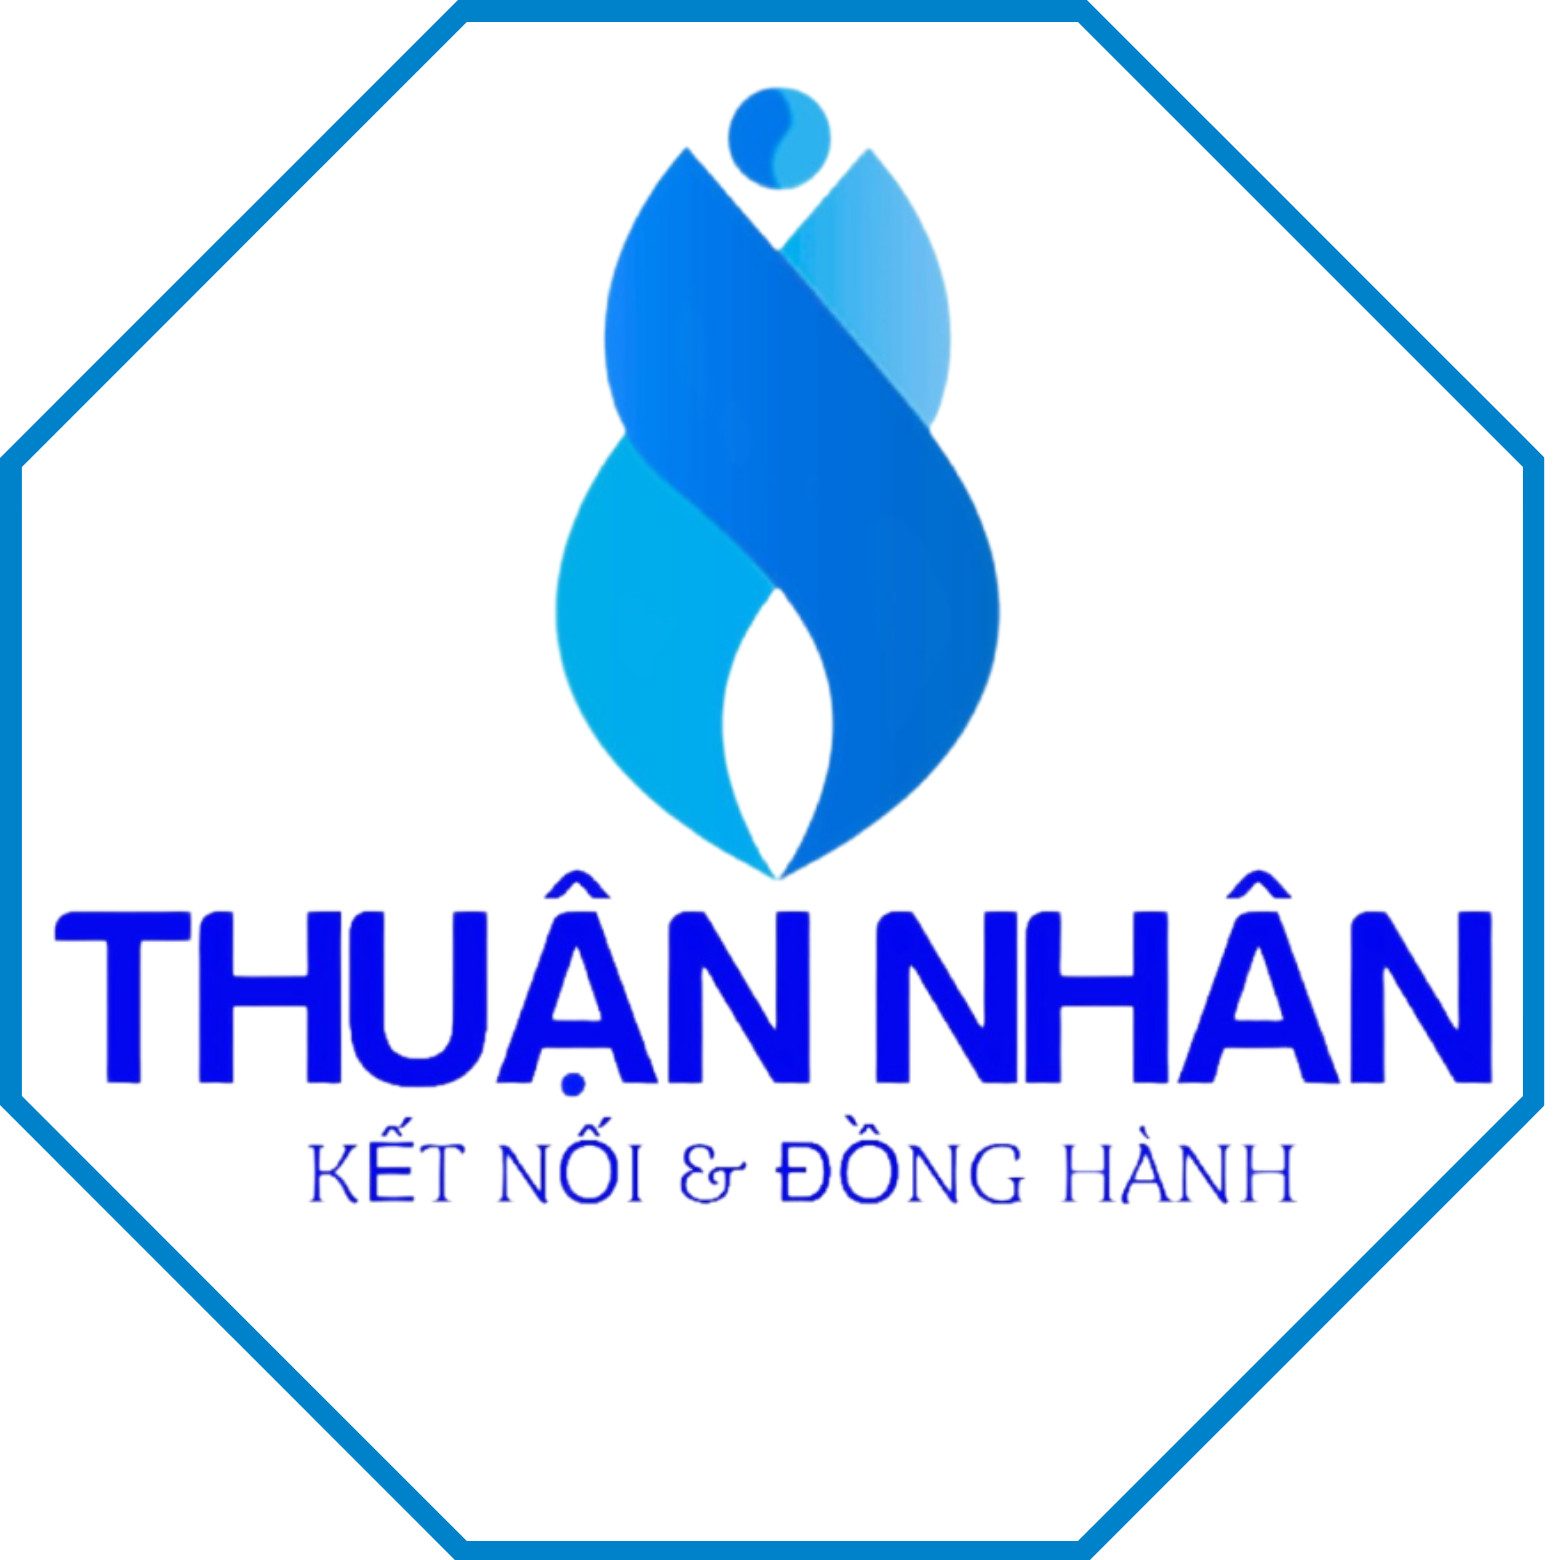 Thuan Nhan Company